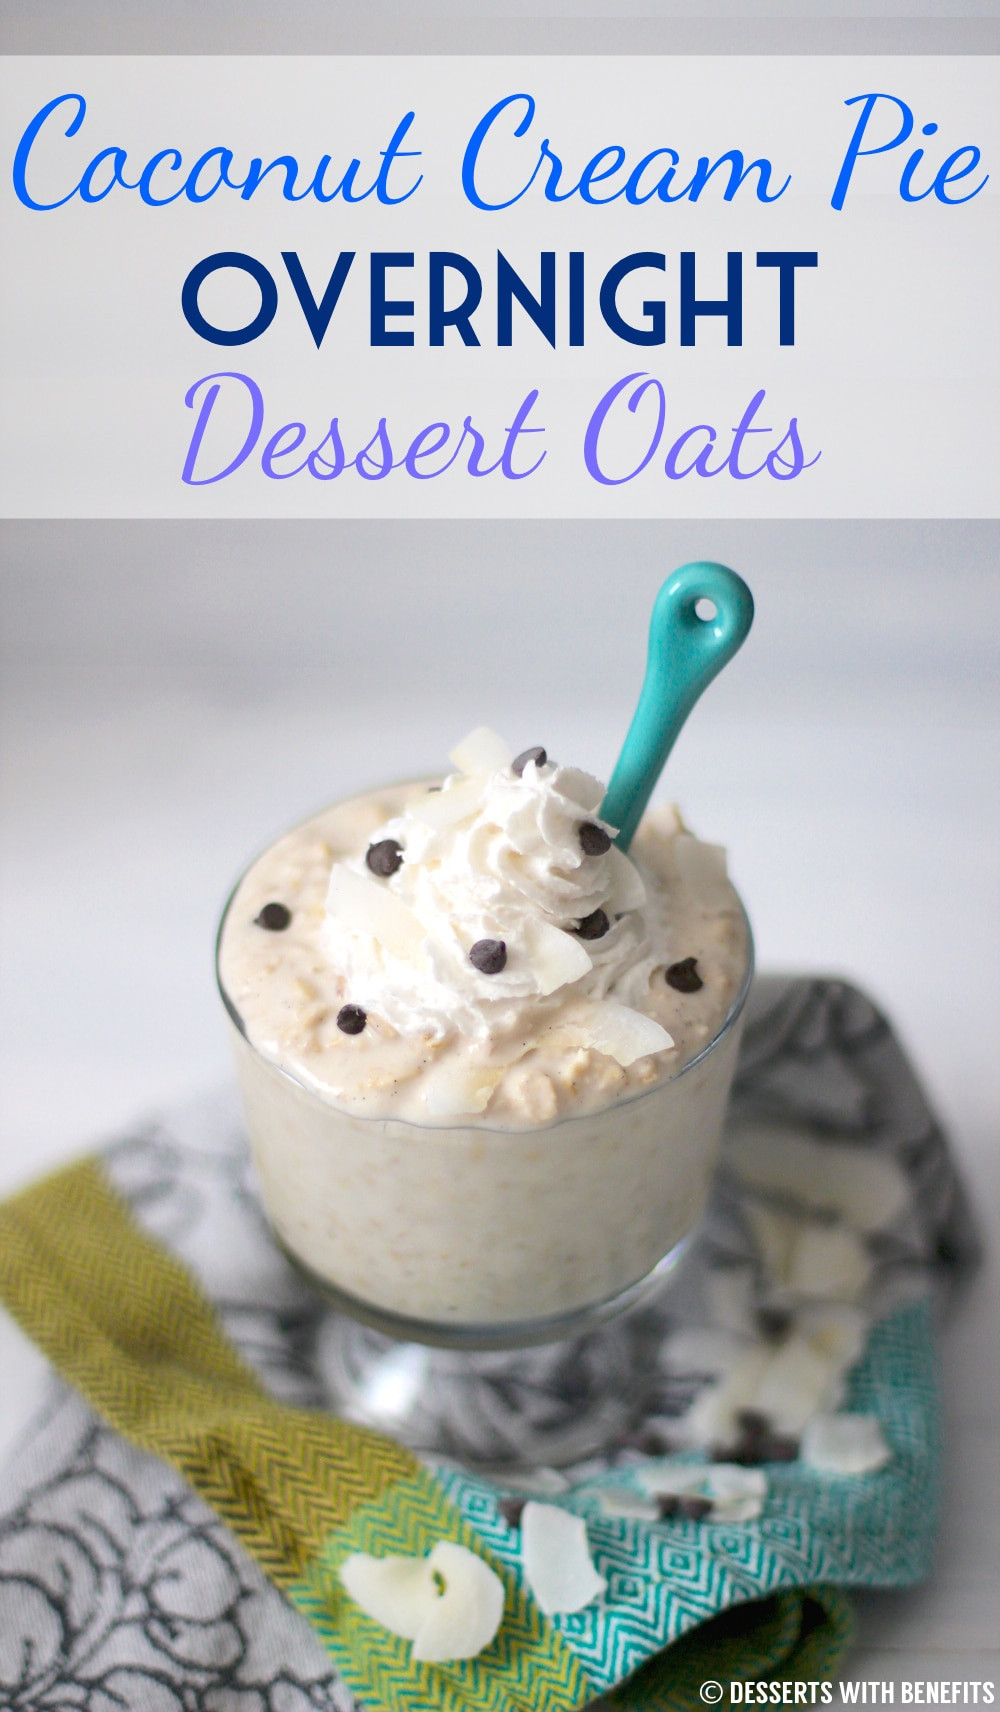 Vegan Dessert Recipes With Coconut Milk
 5 Ingre nt Coconut Cream Pie Overnight Dessert Oats